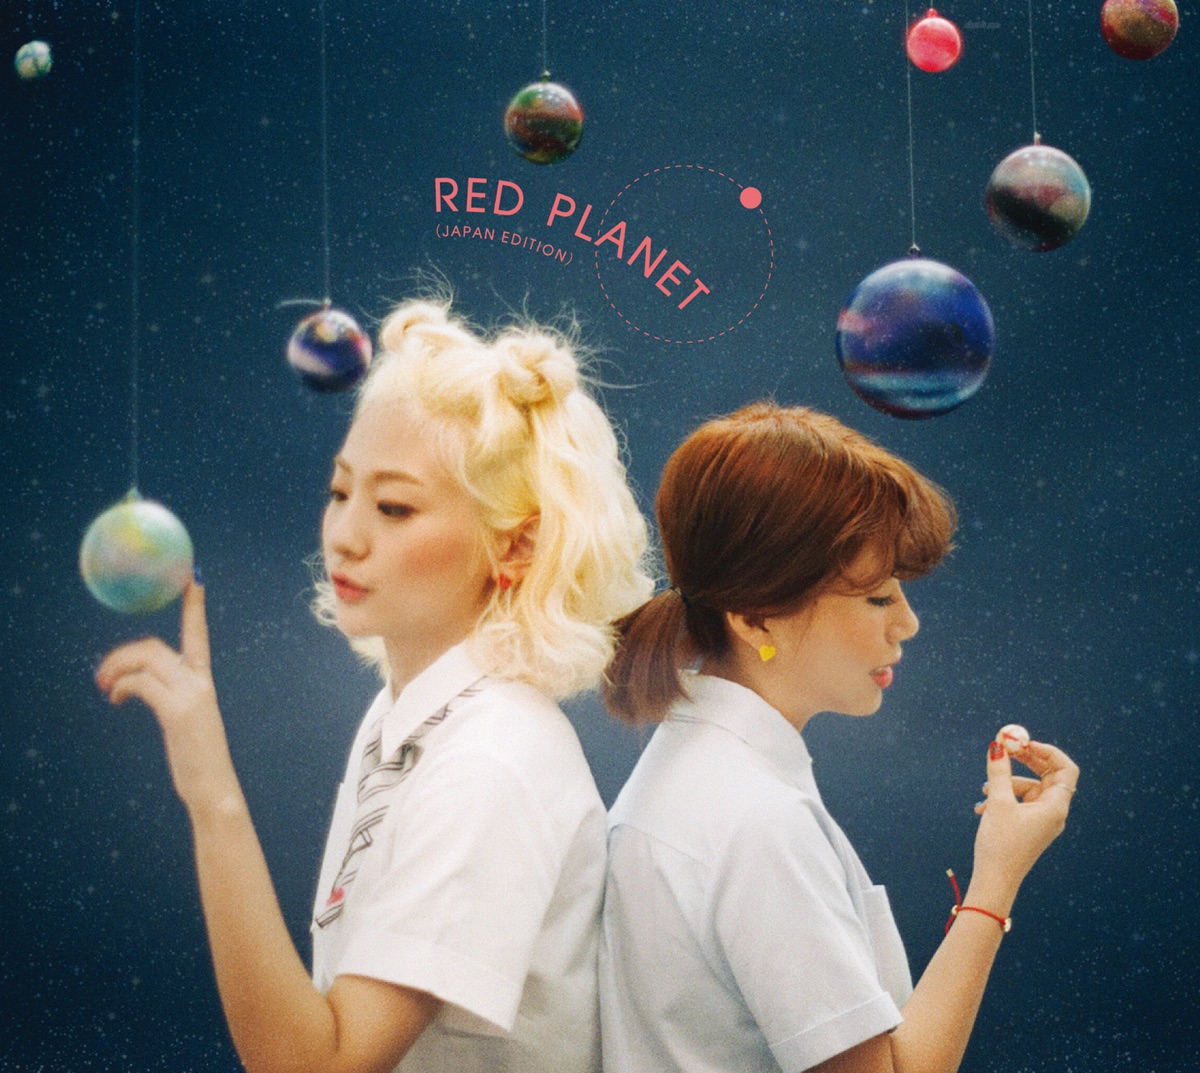 Bolbbalgan4 – RED PLANET (JAPAN EDITION) – EP